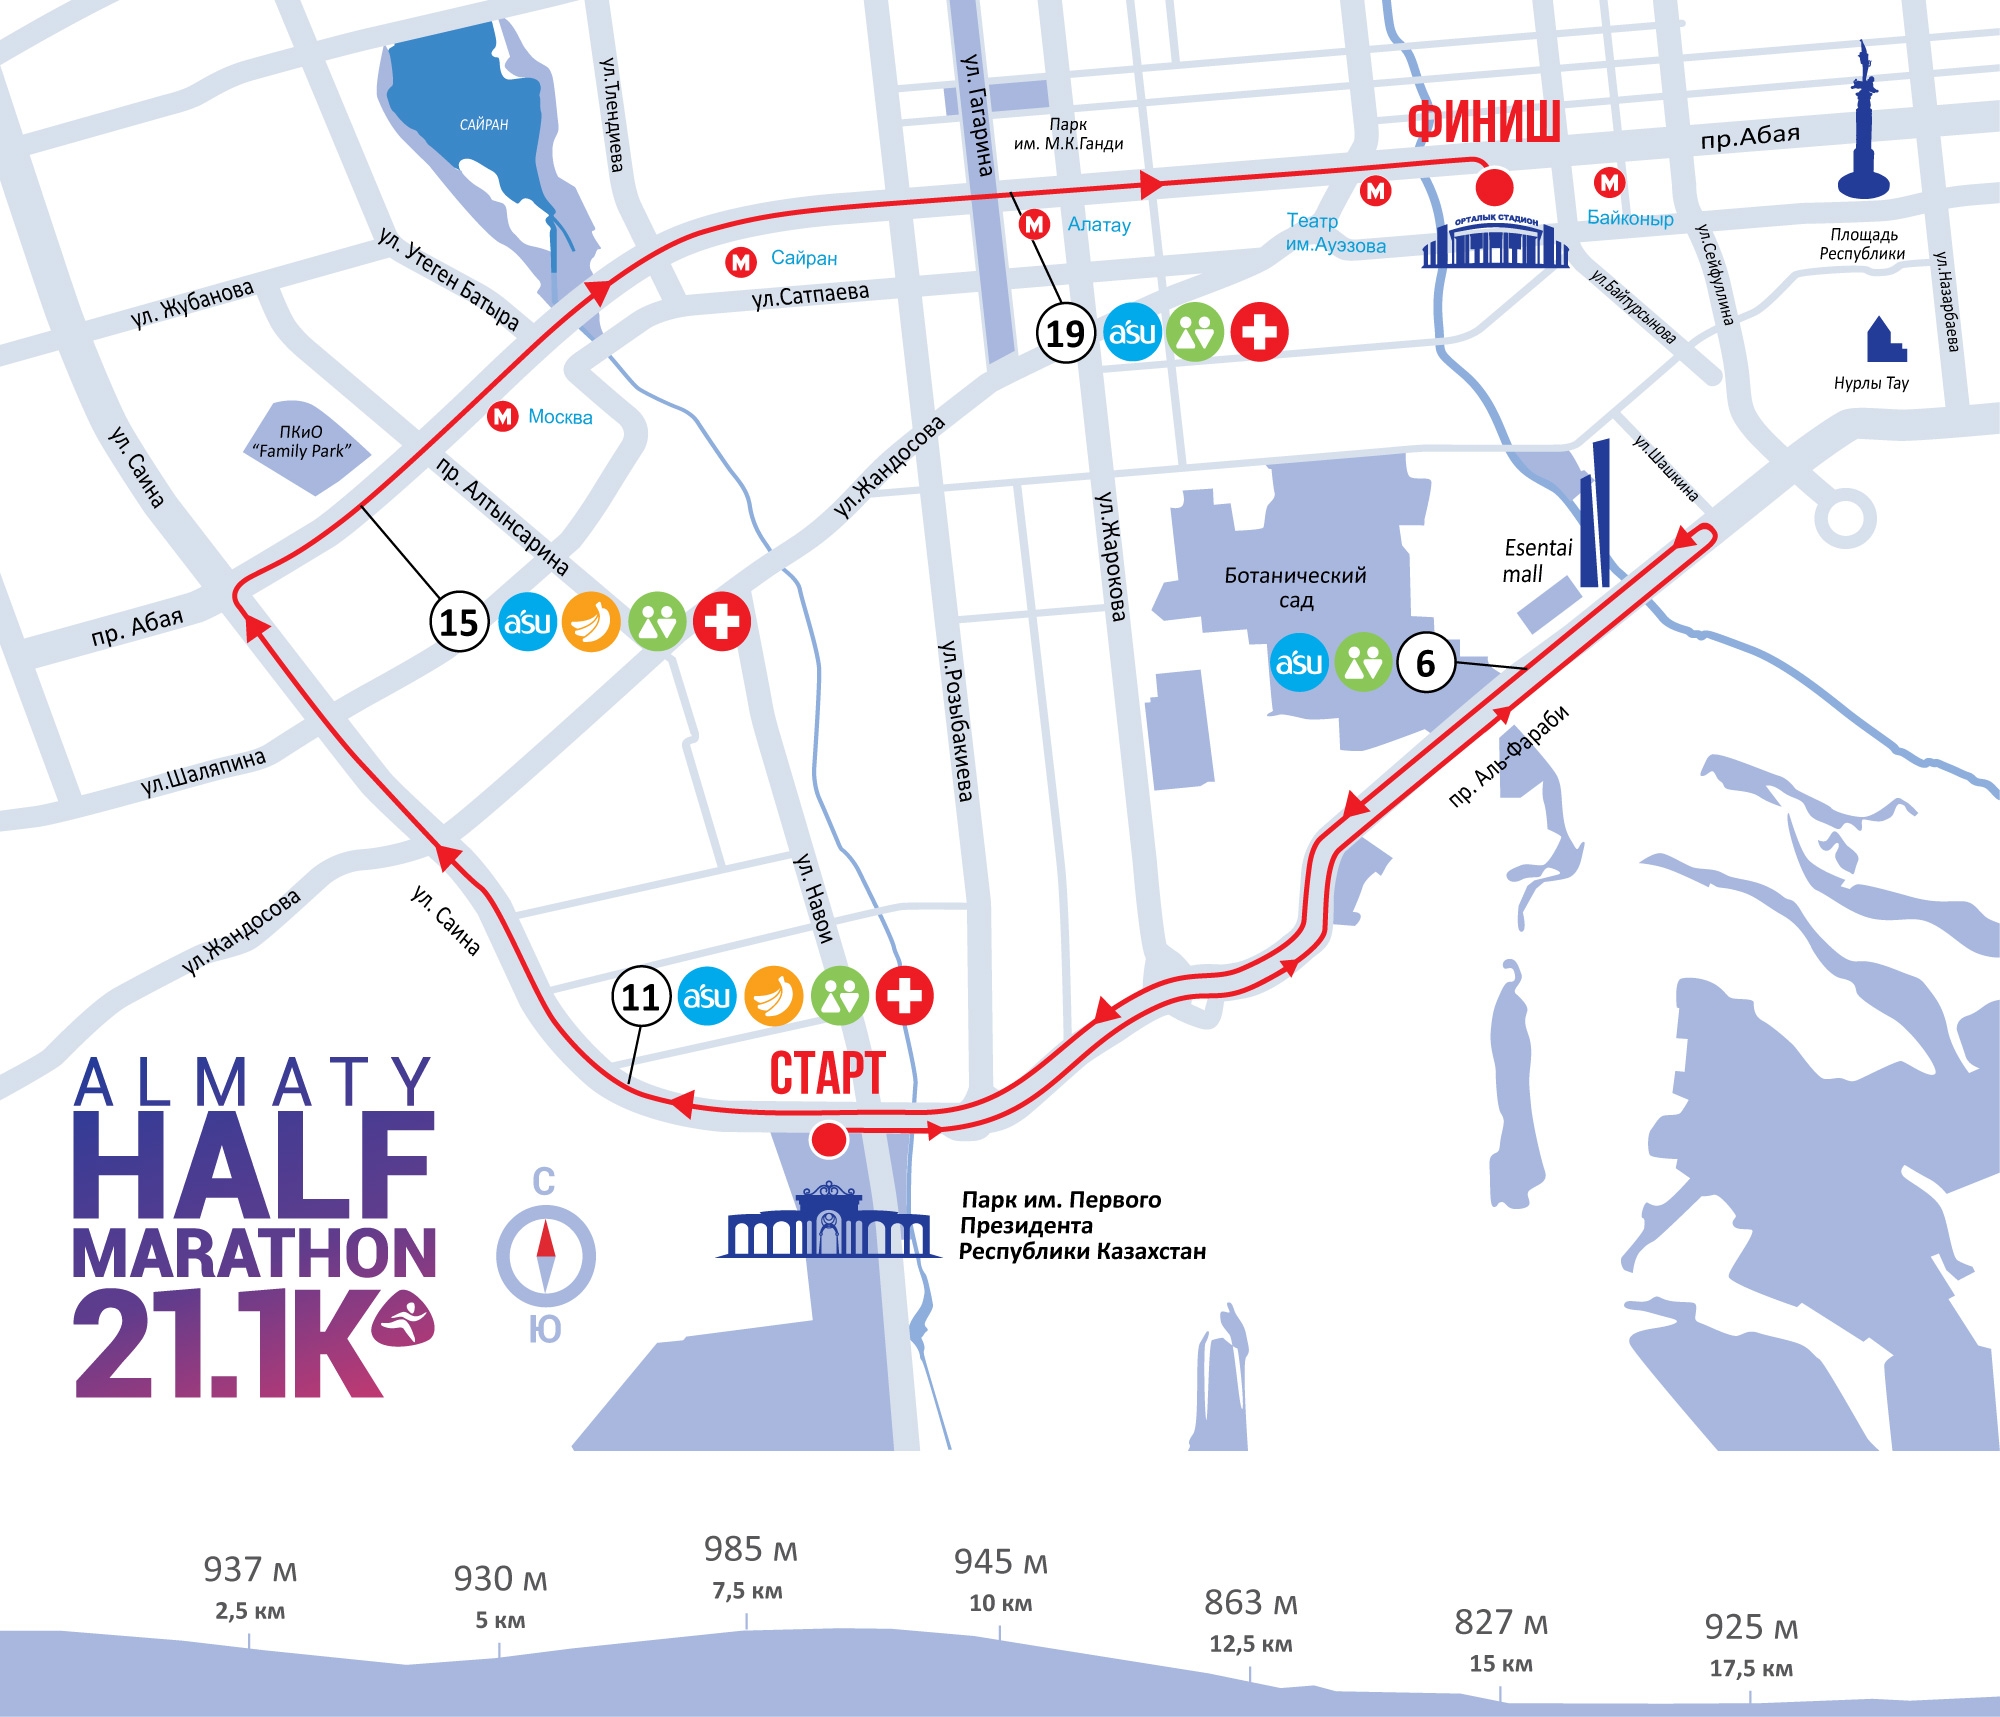 Almaty Half Marathon 2021